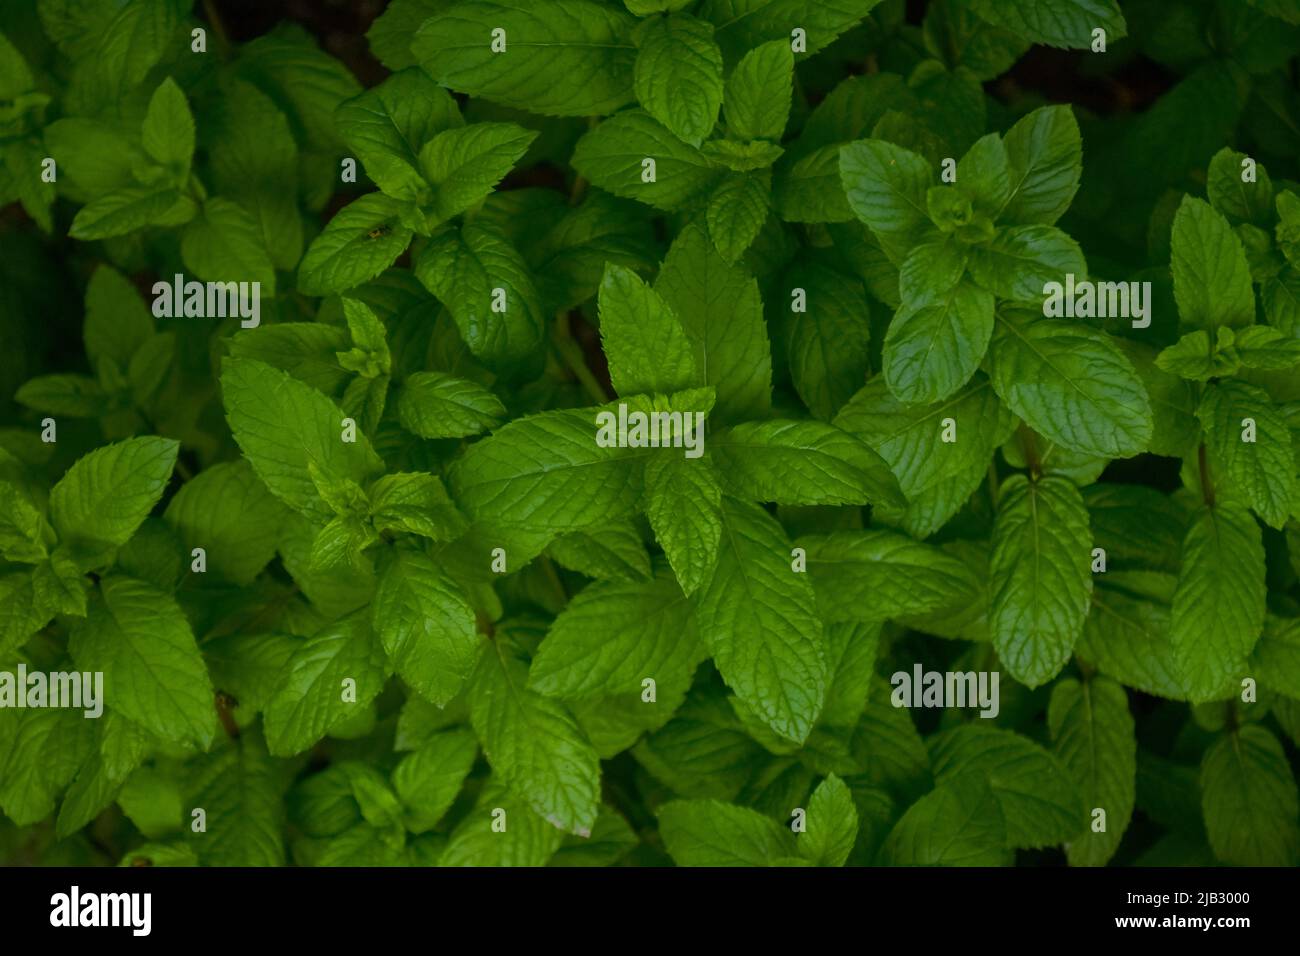 Spearmint, Garden mint, Spear mint, Bush mint, Menthol Mint in the garden bed at early morning Stock Photo